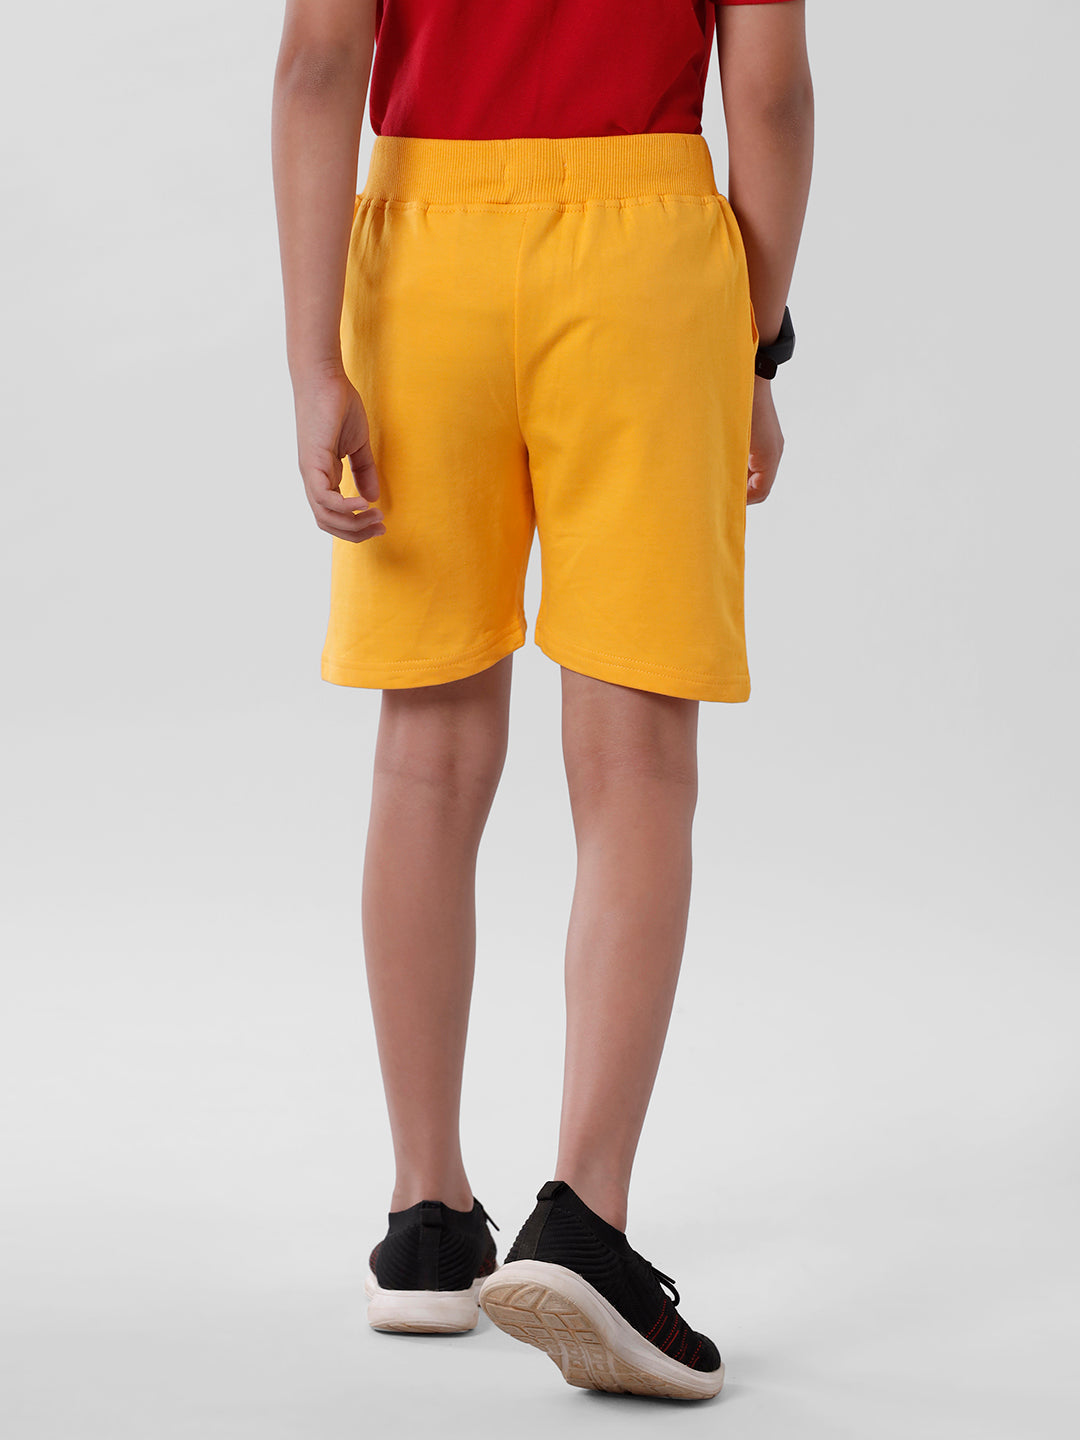 Kids - Boys Shorts Bright Yellow